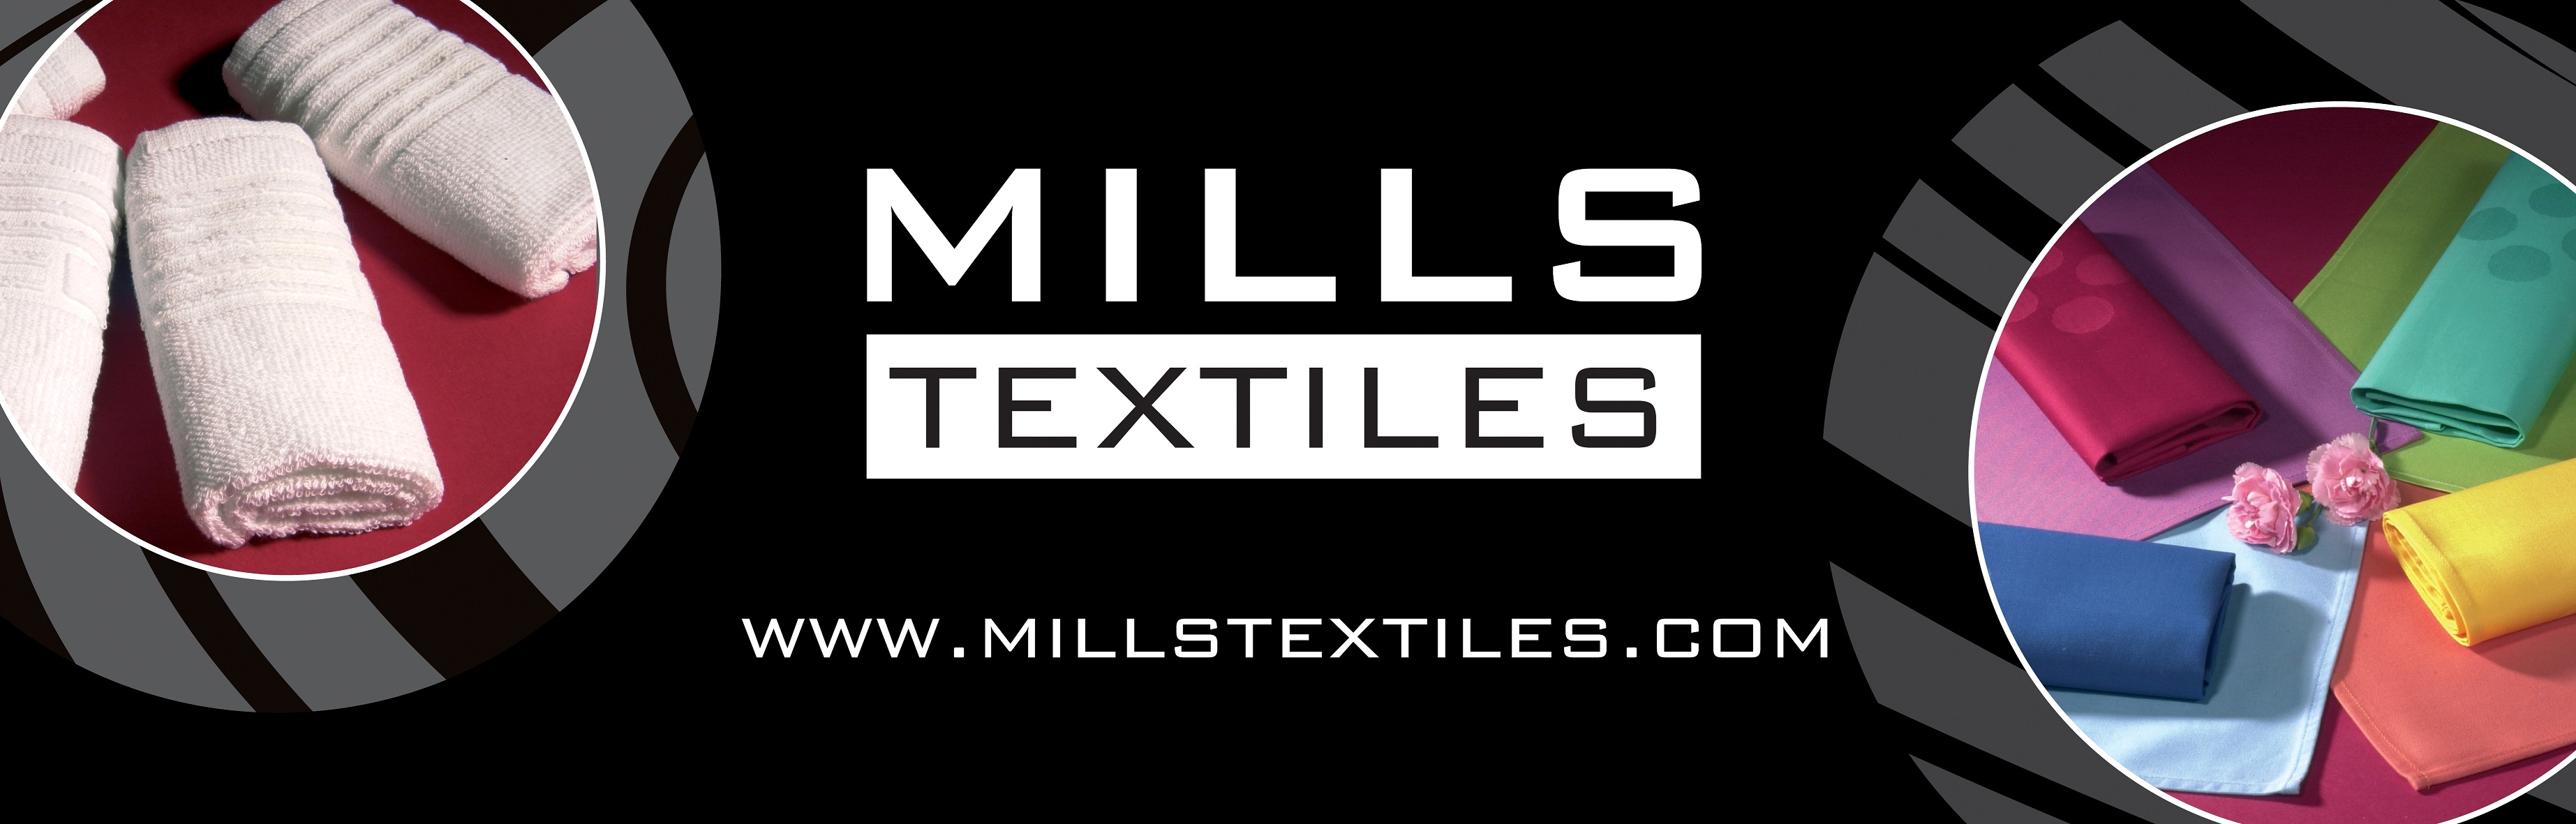 Mills Textiles